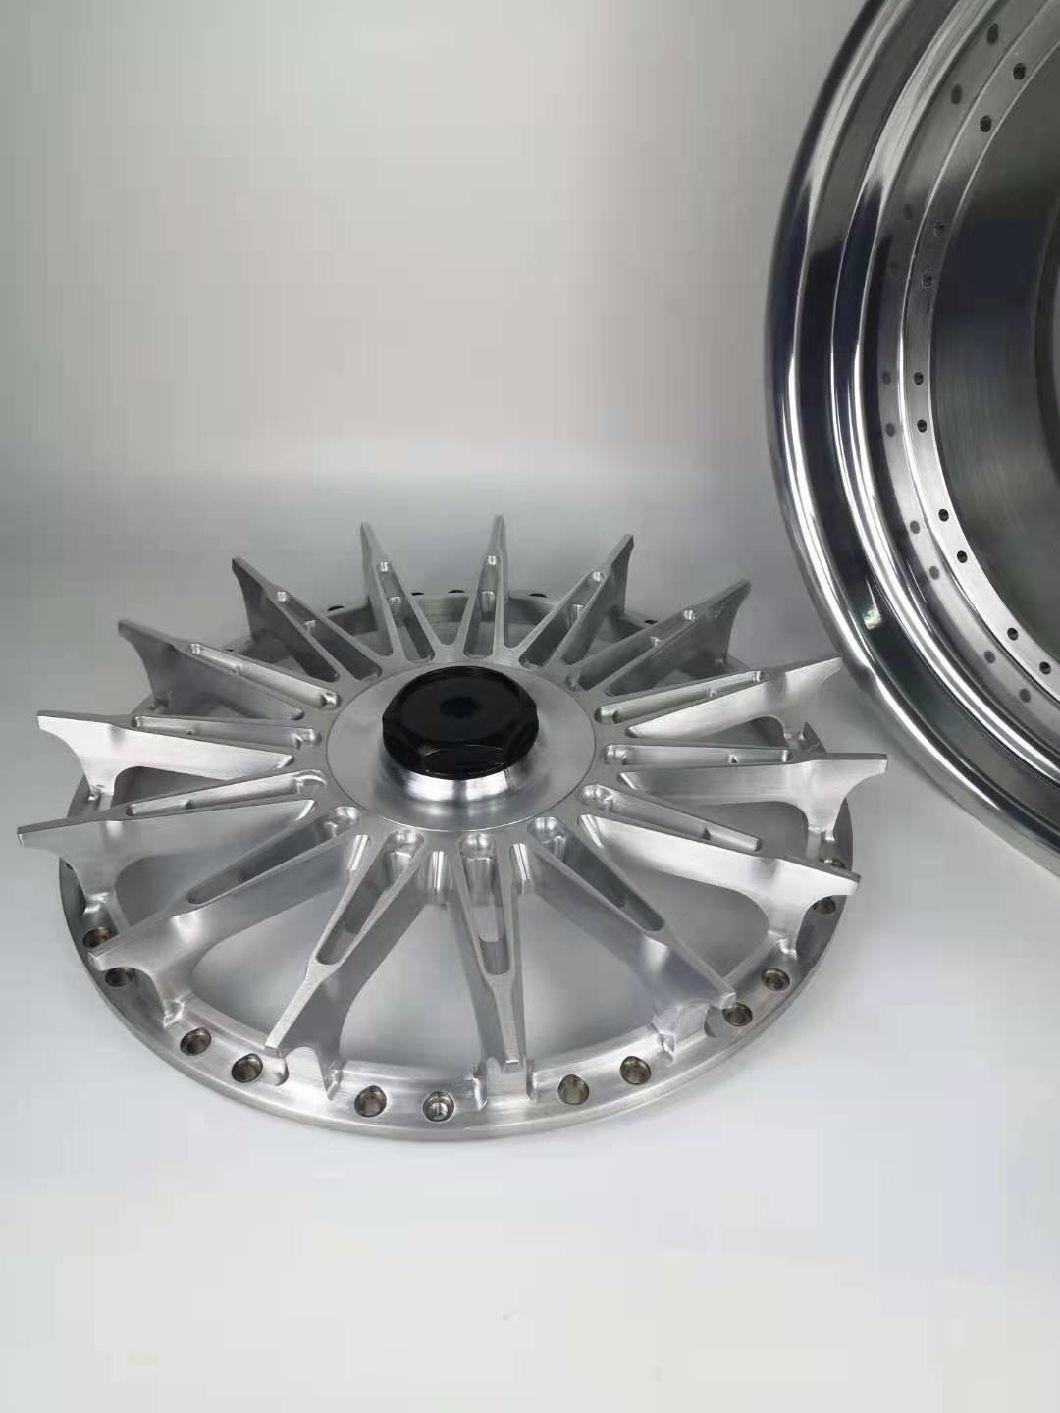 Aluminum Alloy Wheels Manufacturer Customized 18-22 Inch Wholesale Passenger Car 5/6 Spoke Wheels, Suitable for Luxury off-Road Vehicles